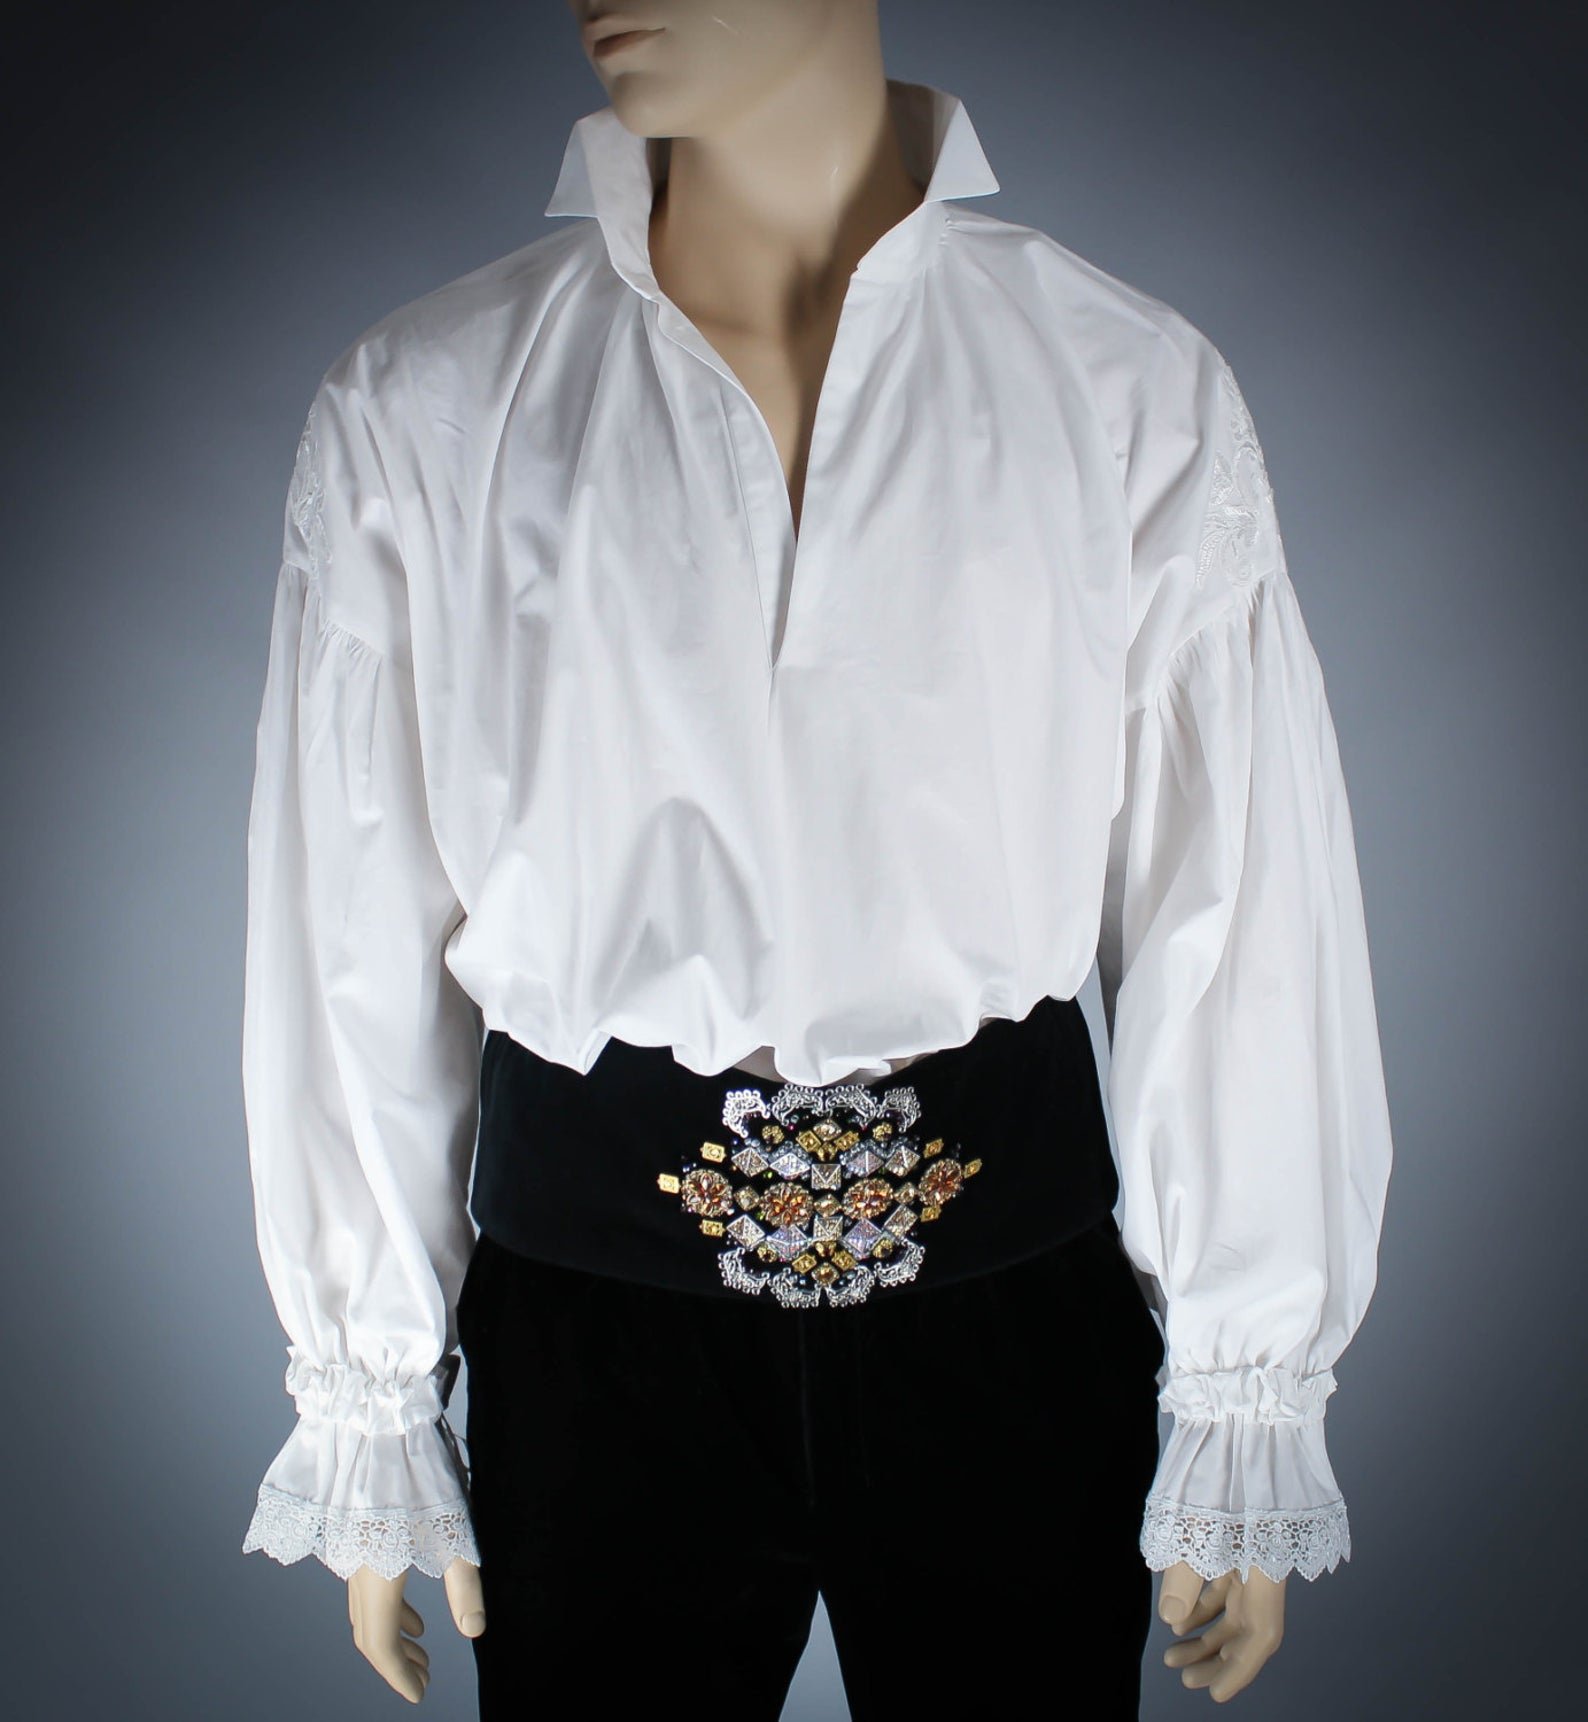 Блузка 18. Рубашки с жабо 18-19 век. Рубашка в стиле 18 века мужская. Рубашка в викторианском стиле. Белая рубашка.